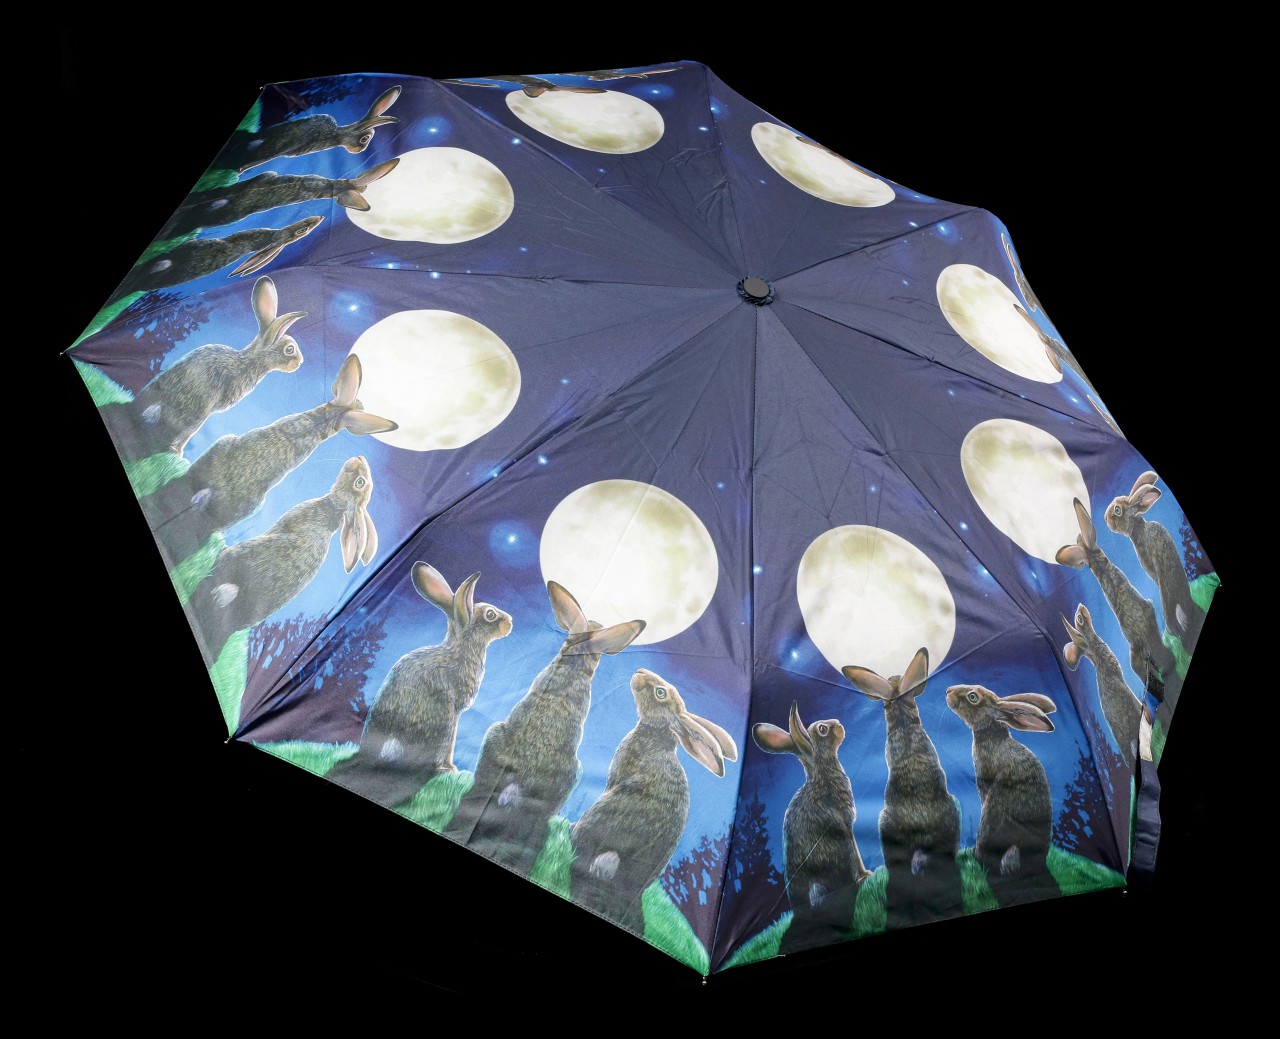 Umbrella with Hares - Moon Shadows